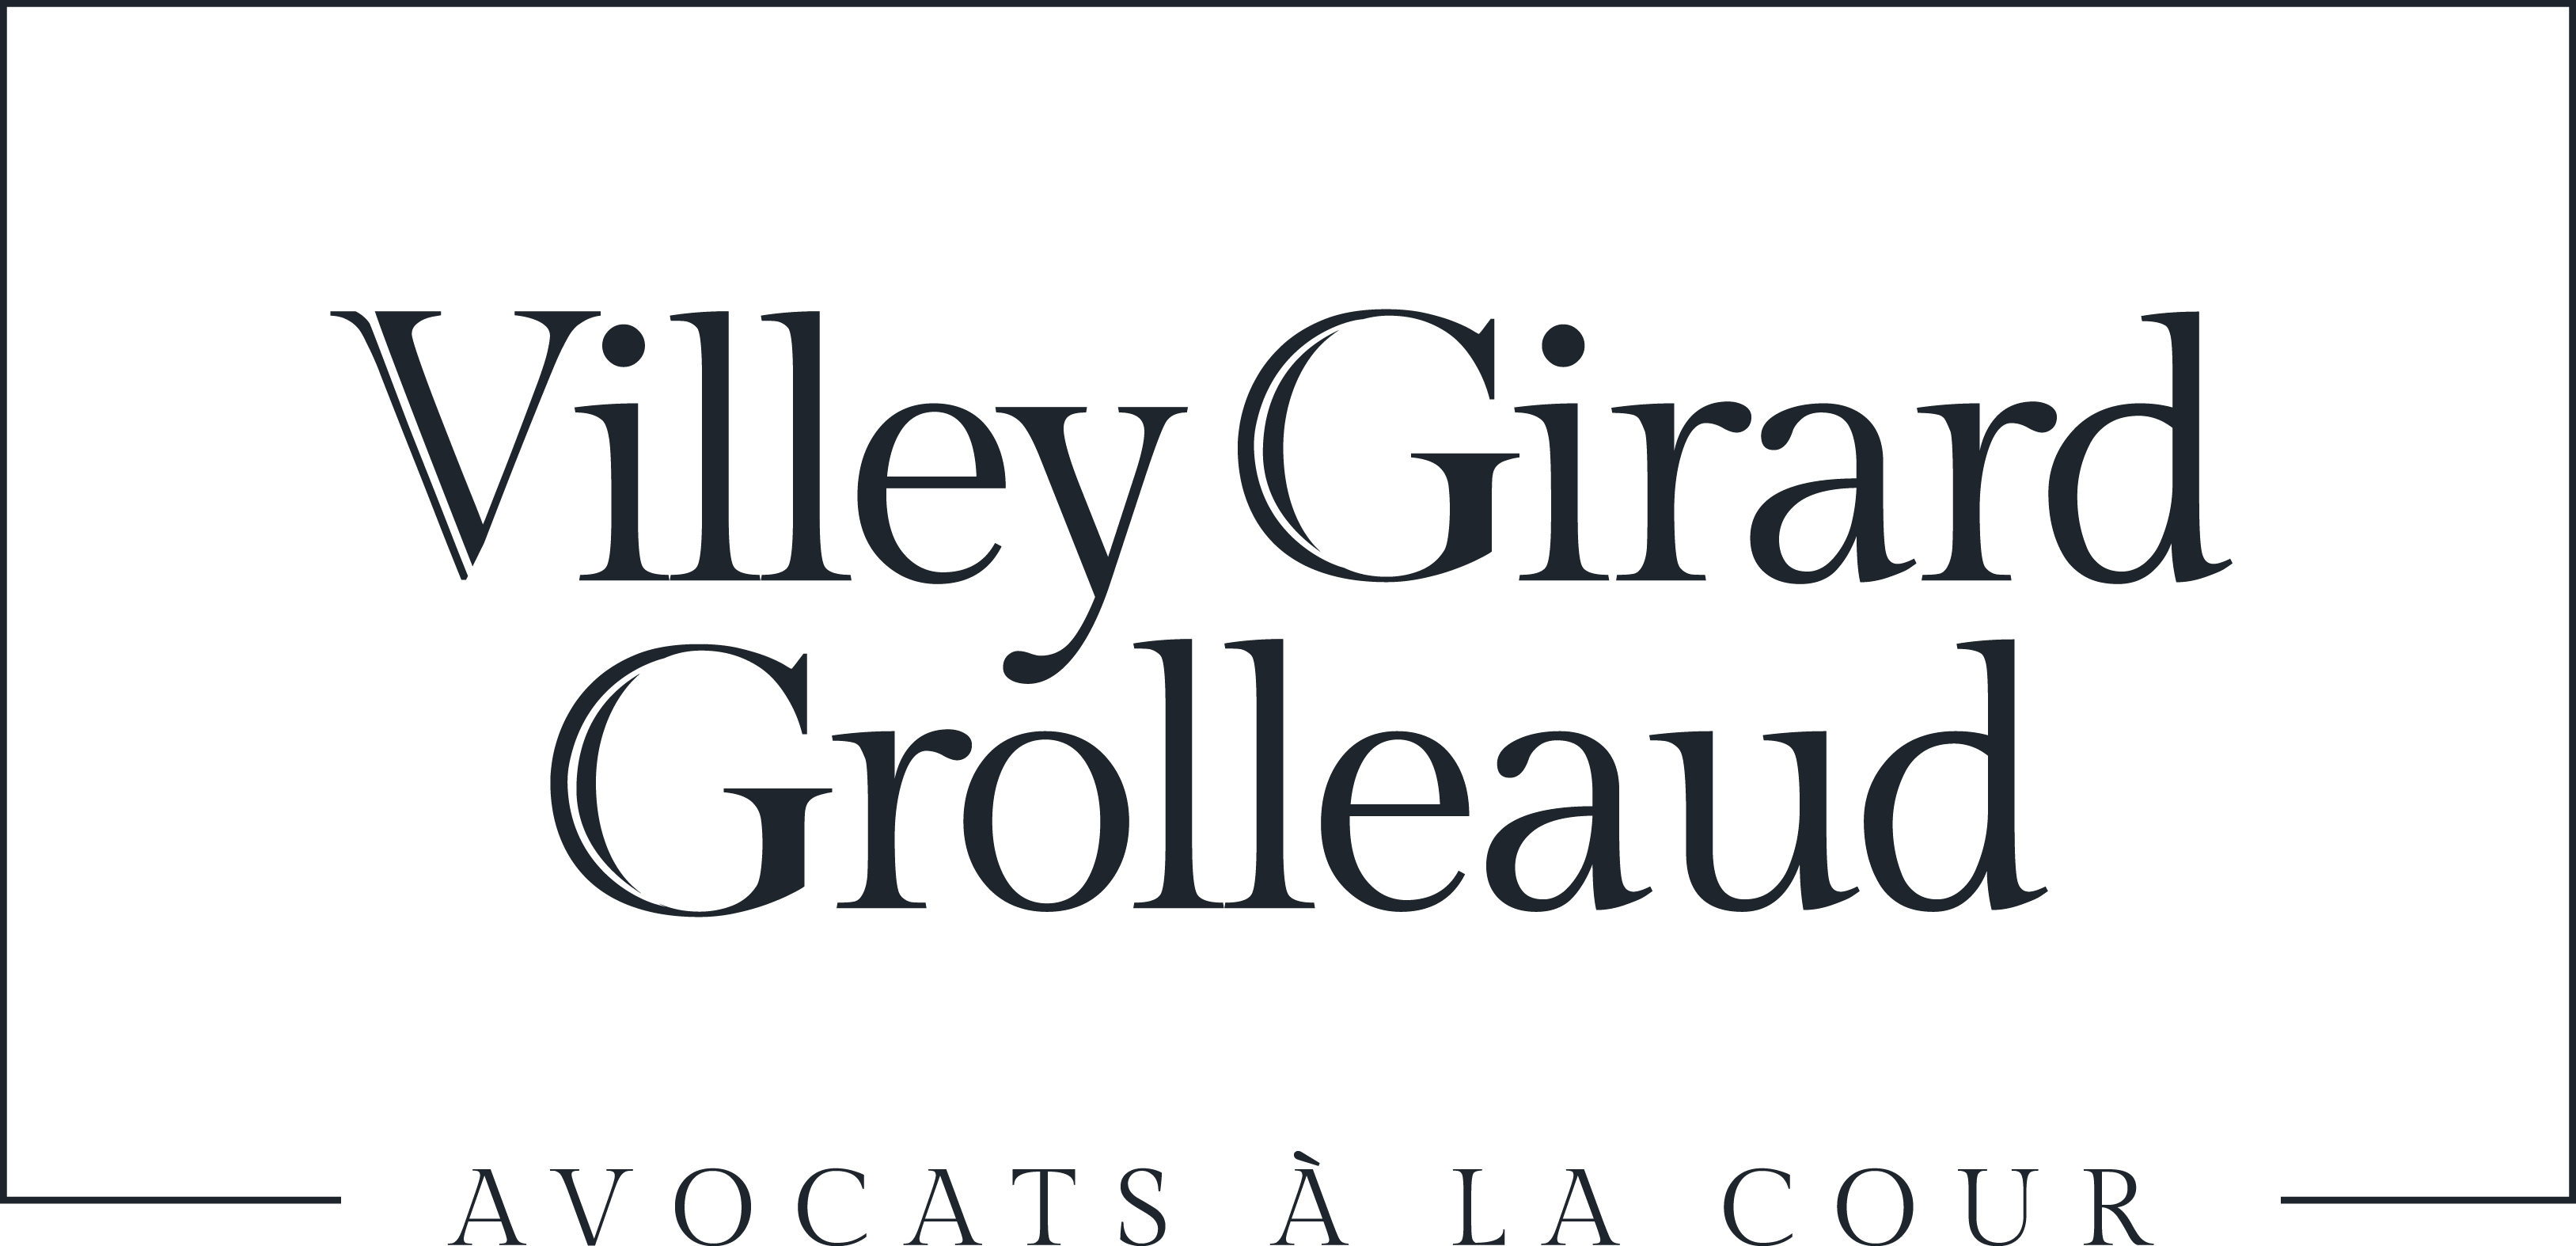 the Villey Girard Grolleaud logo.